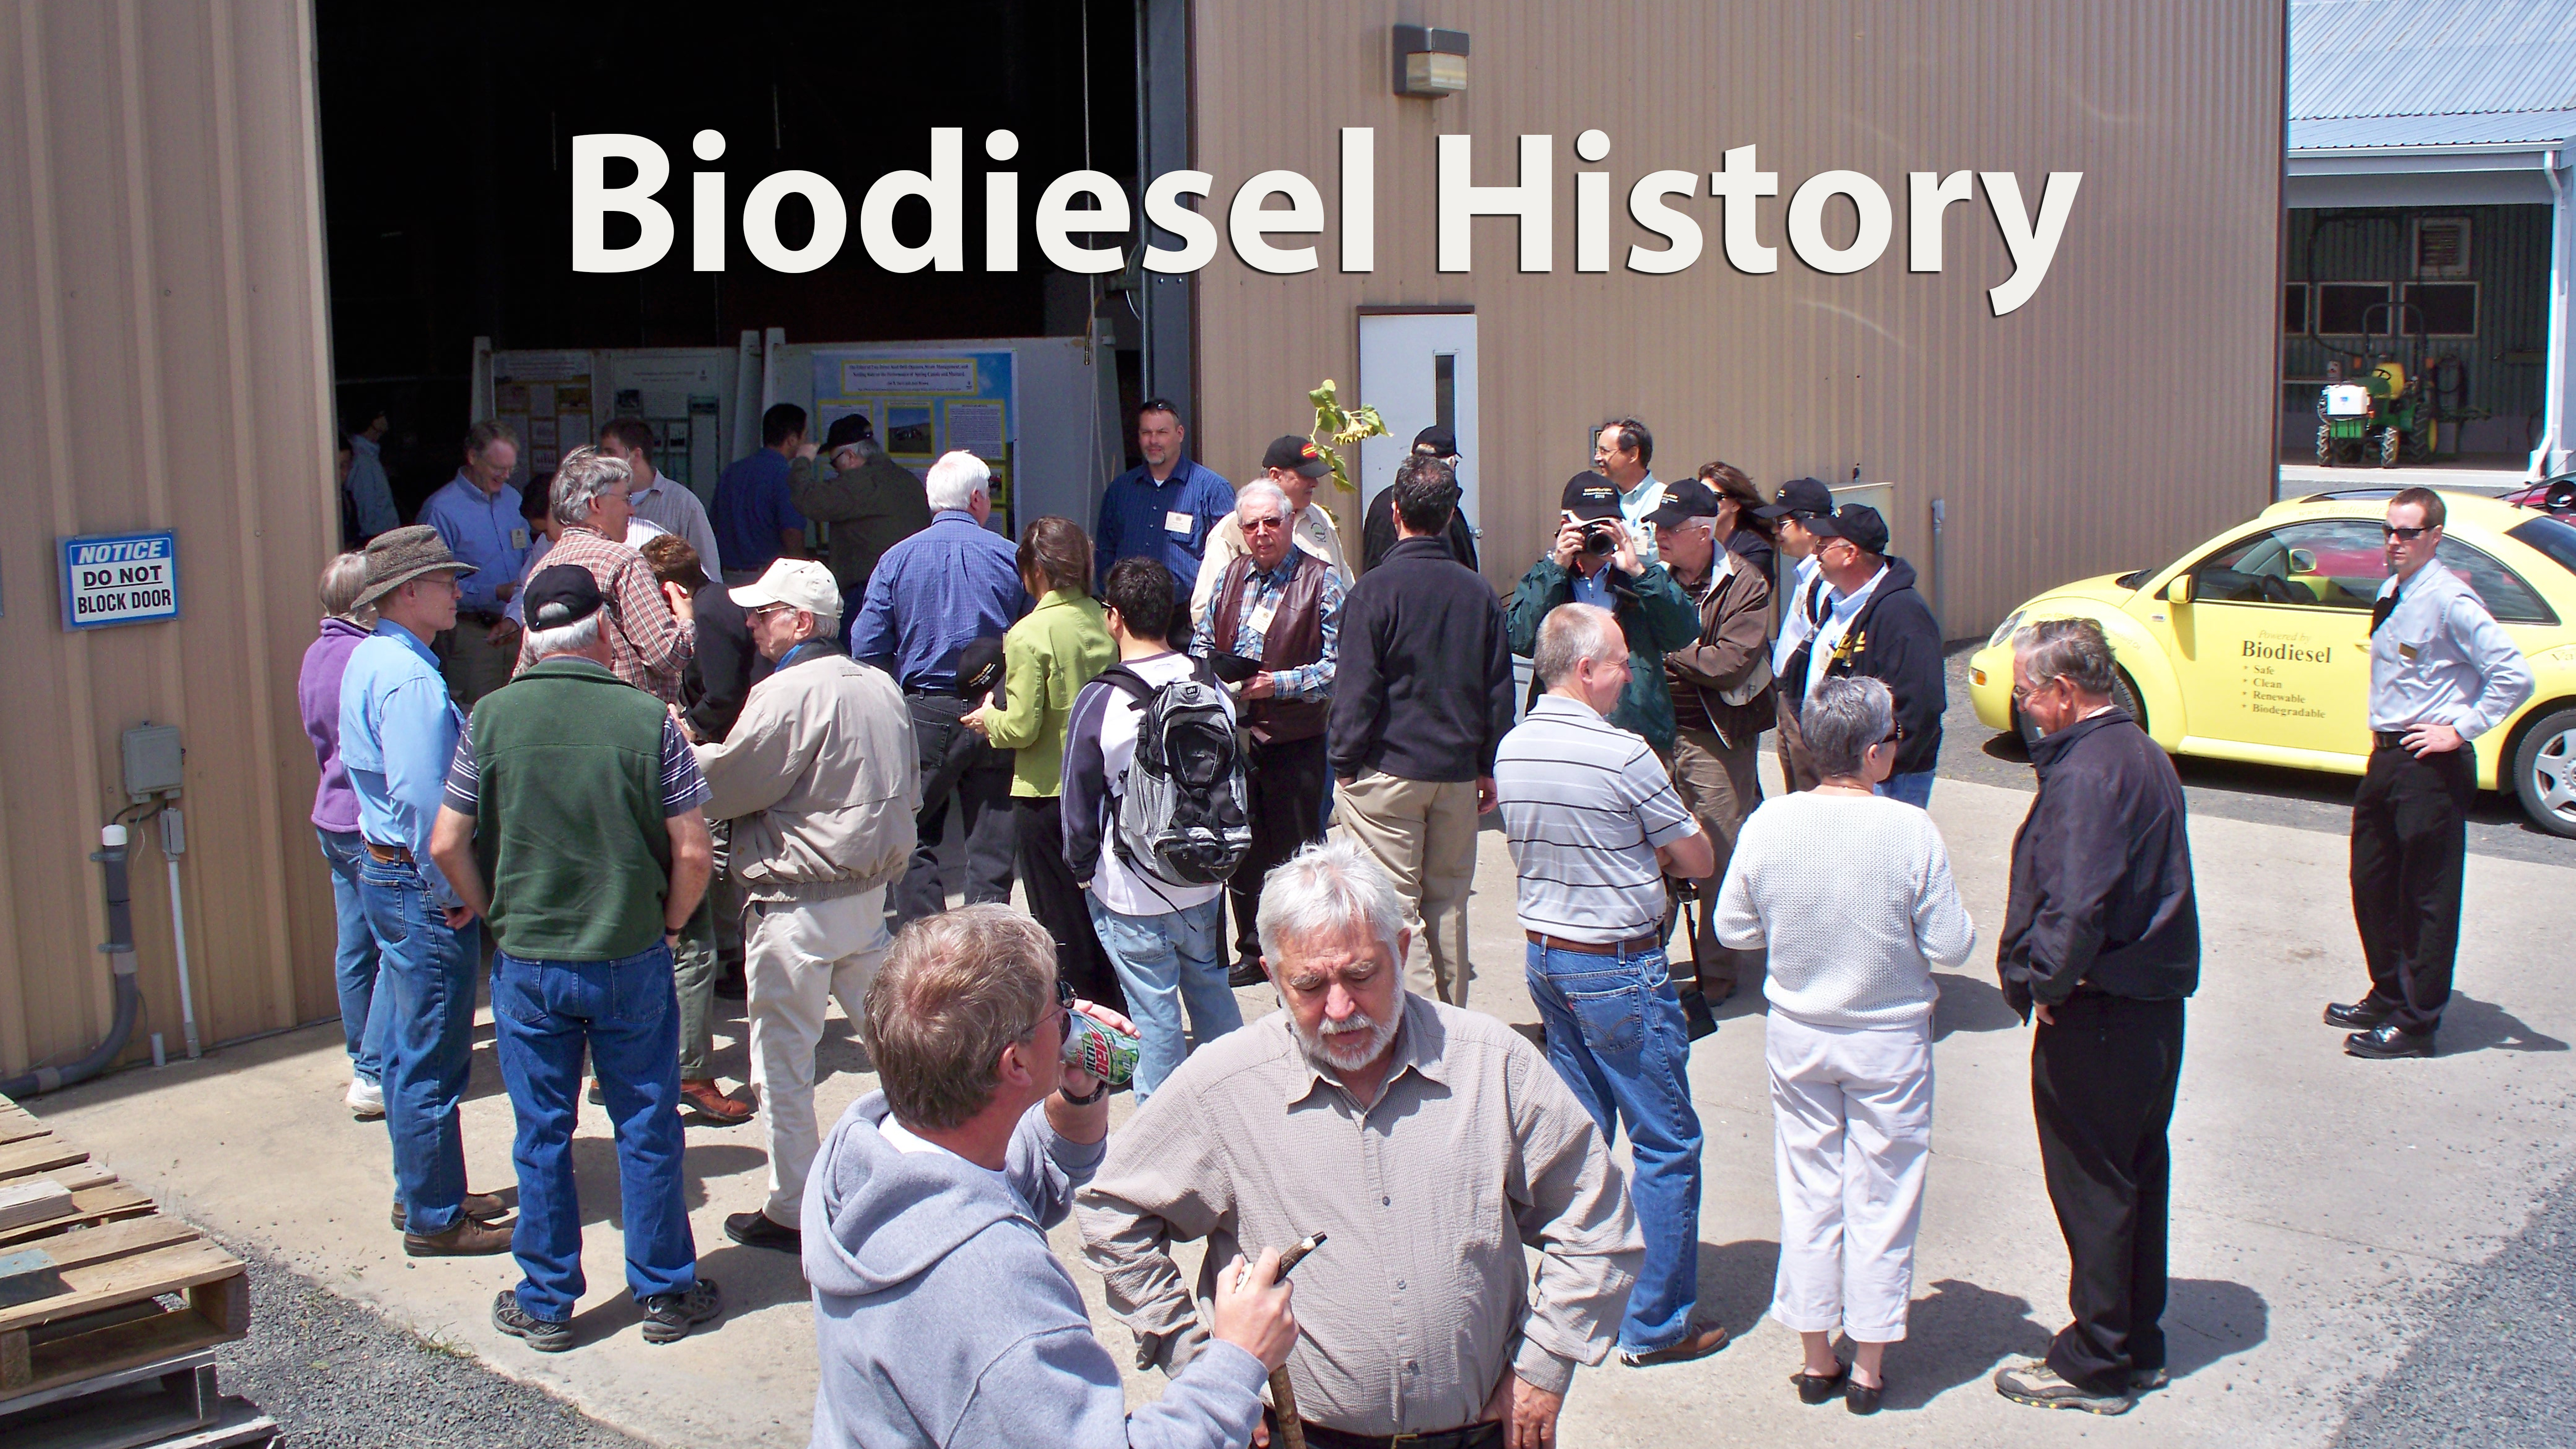  Biodiesel History